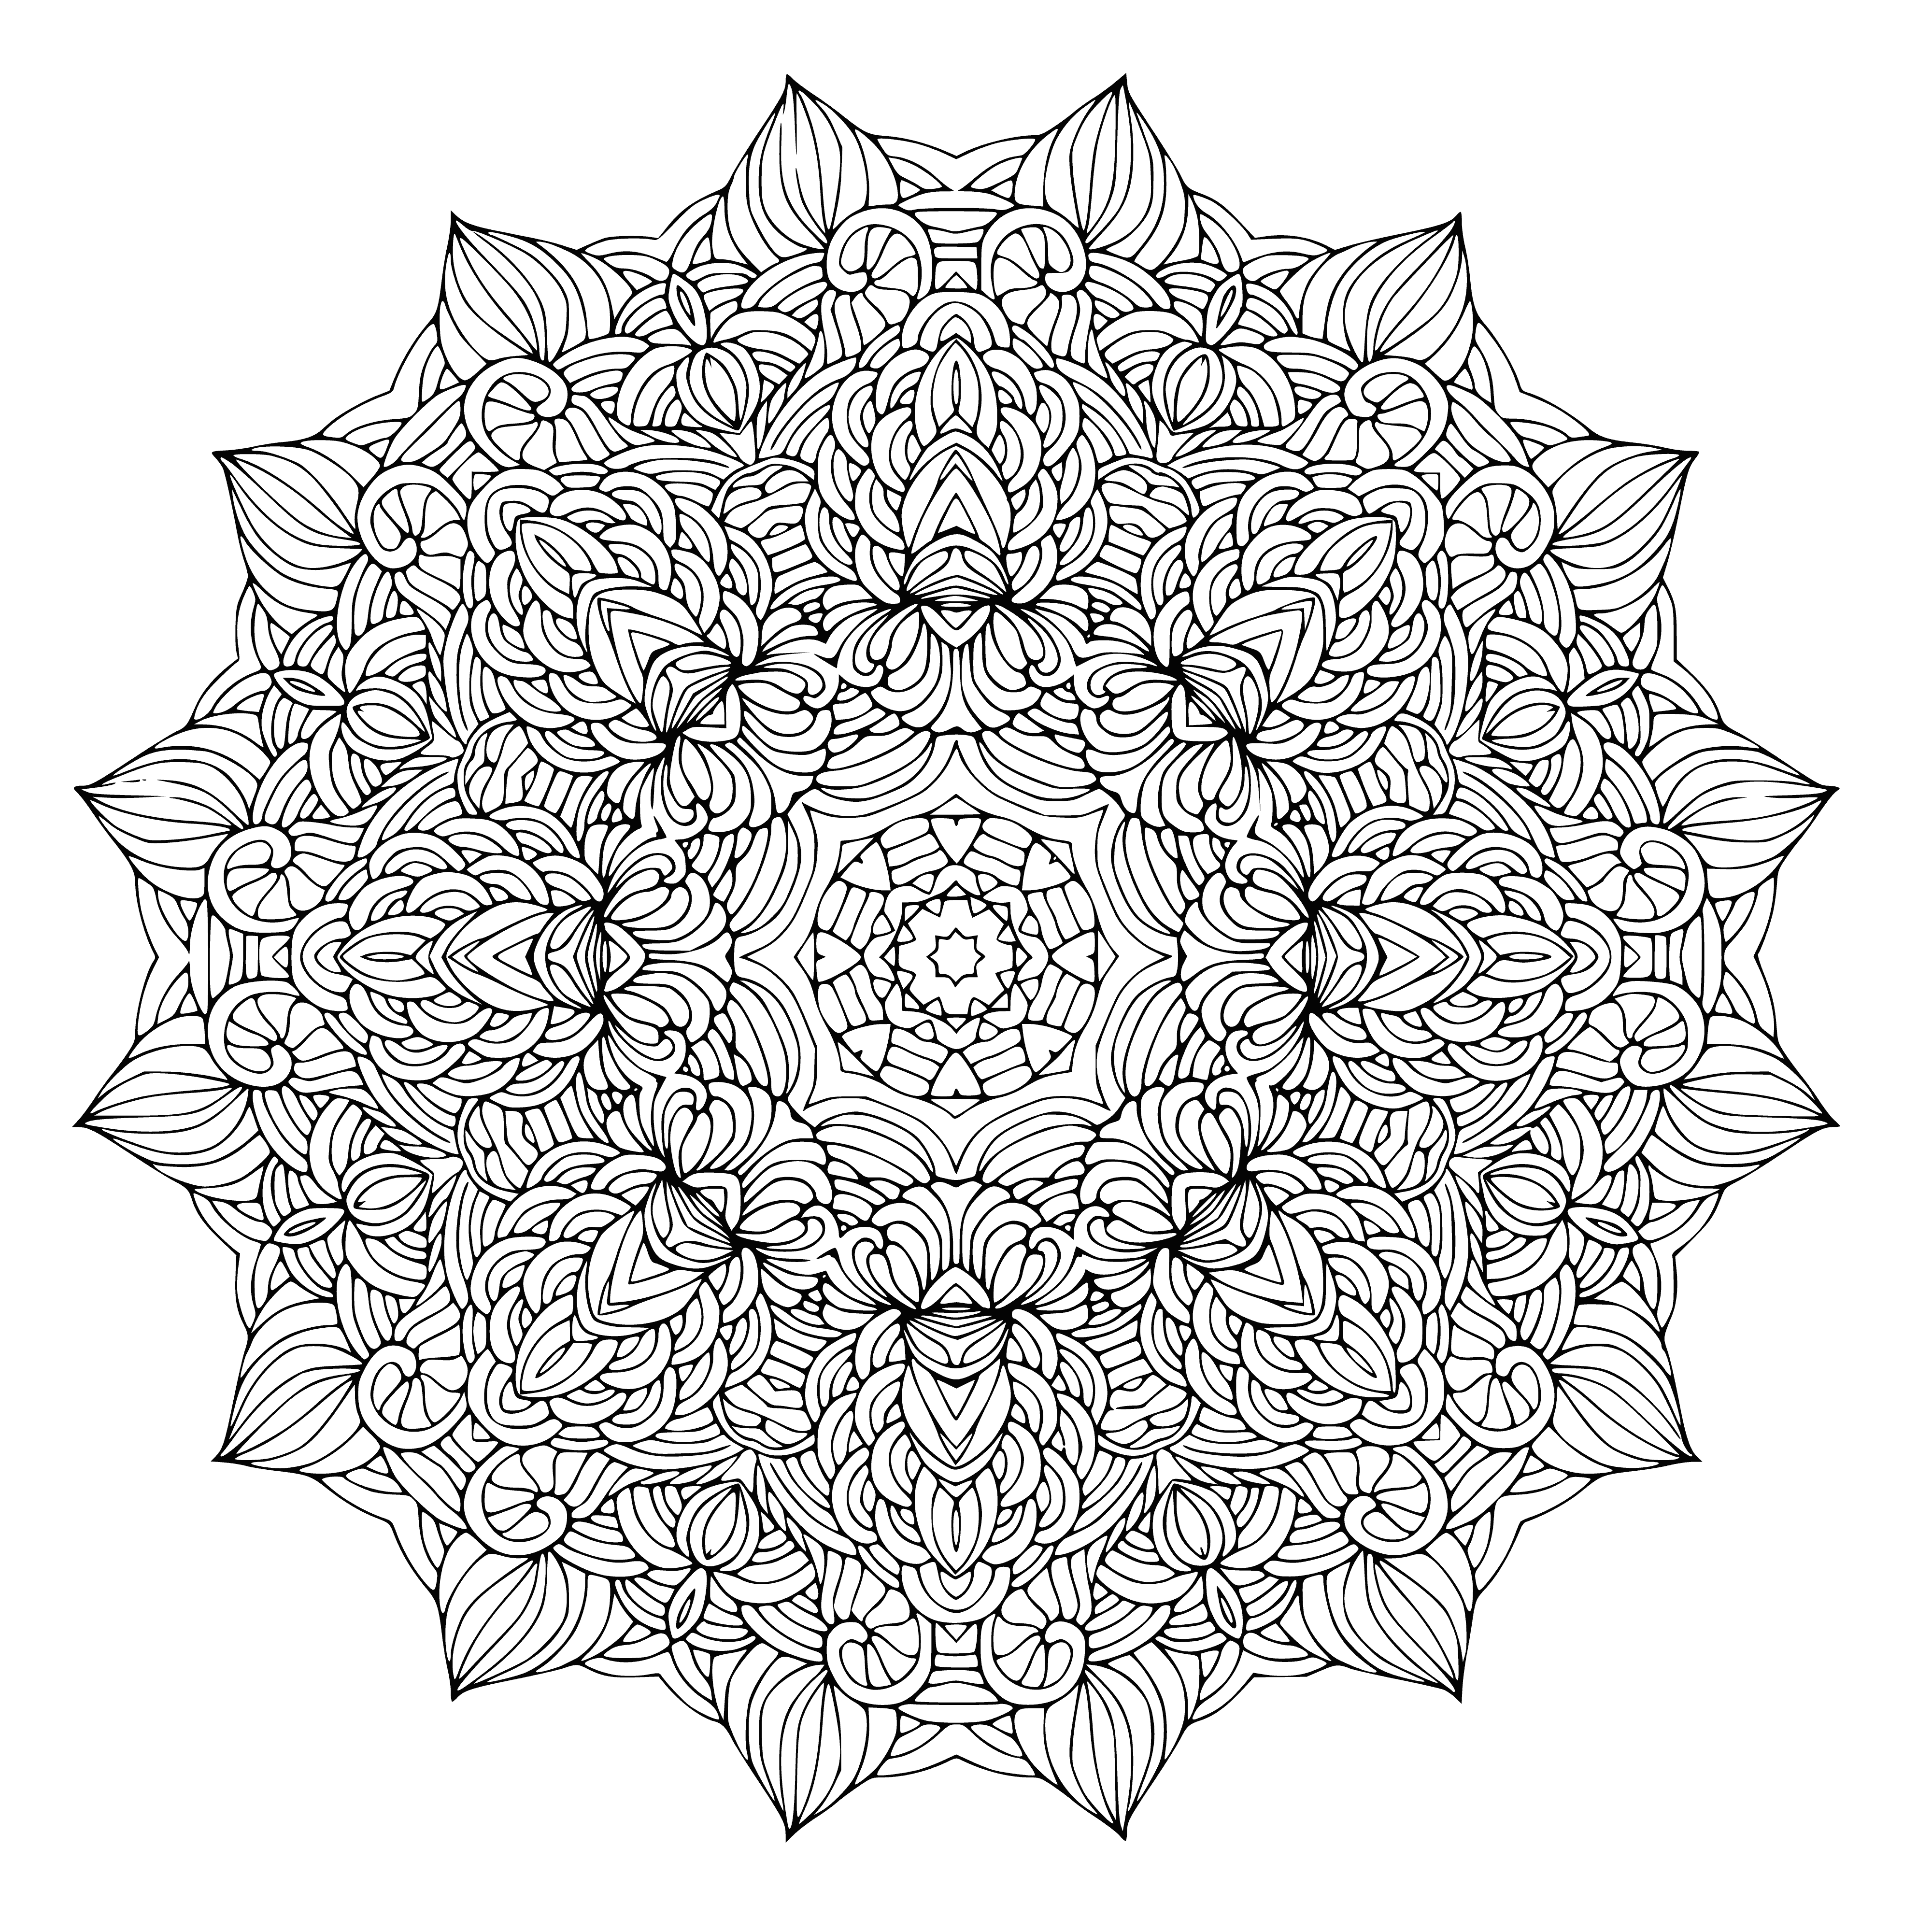 Complex mandala coloring page